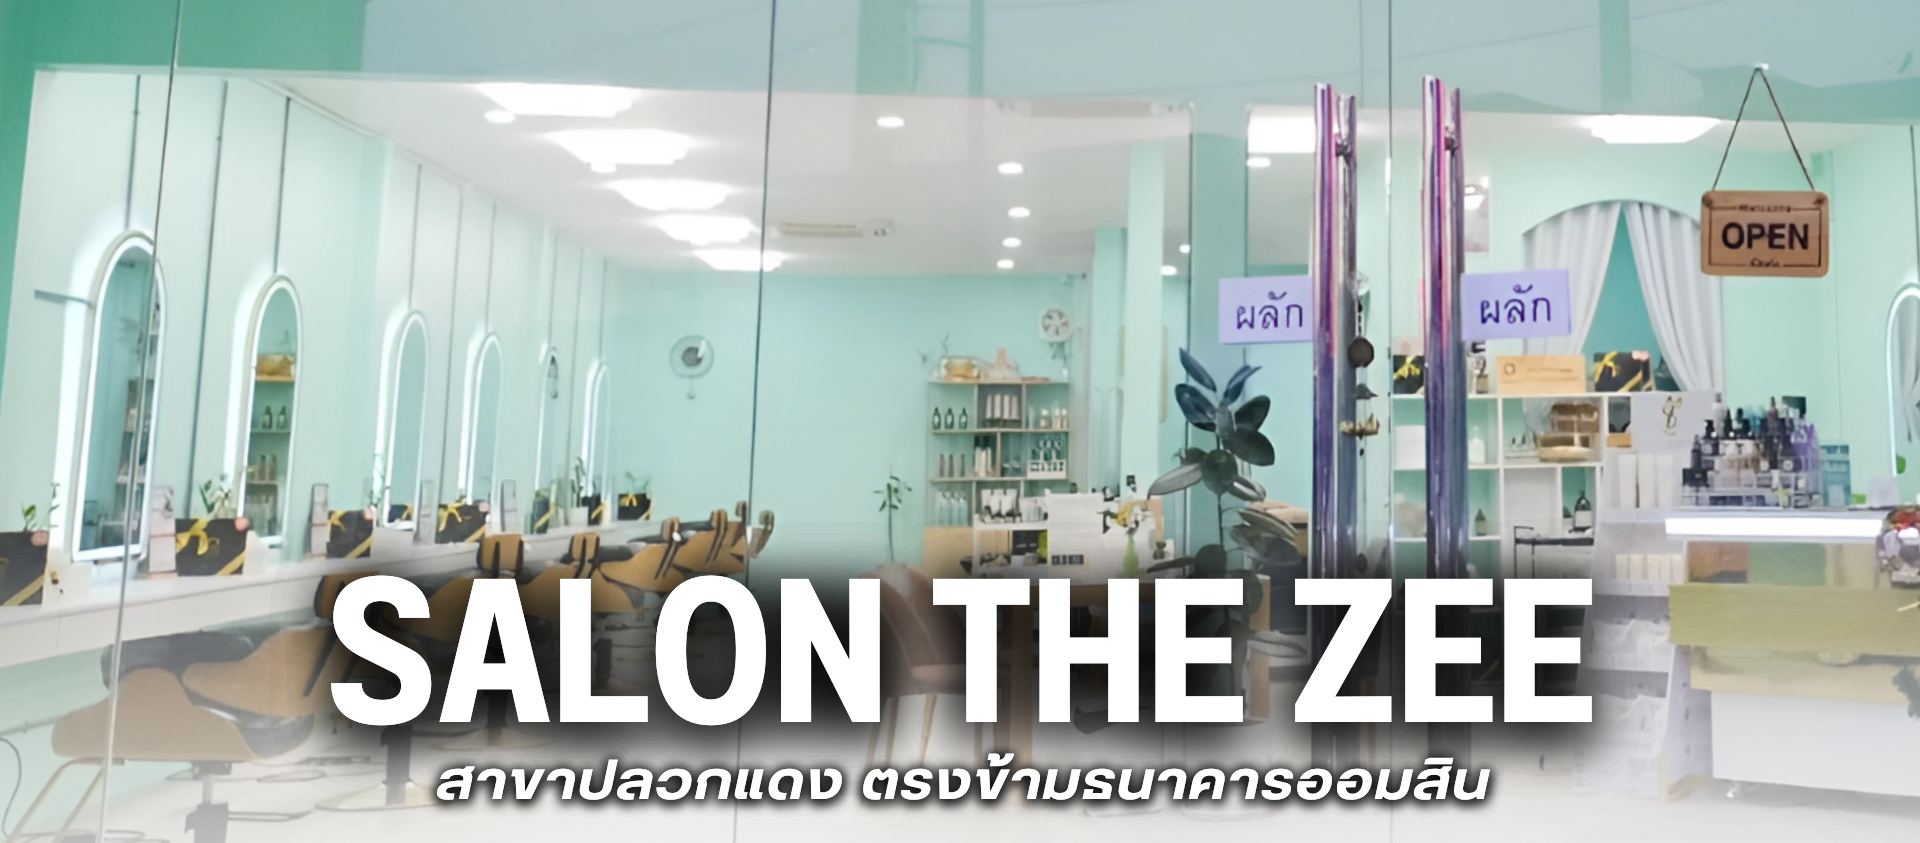 salon the zee (24)